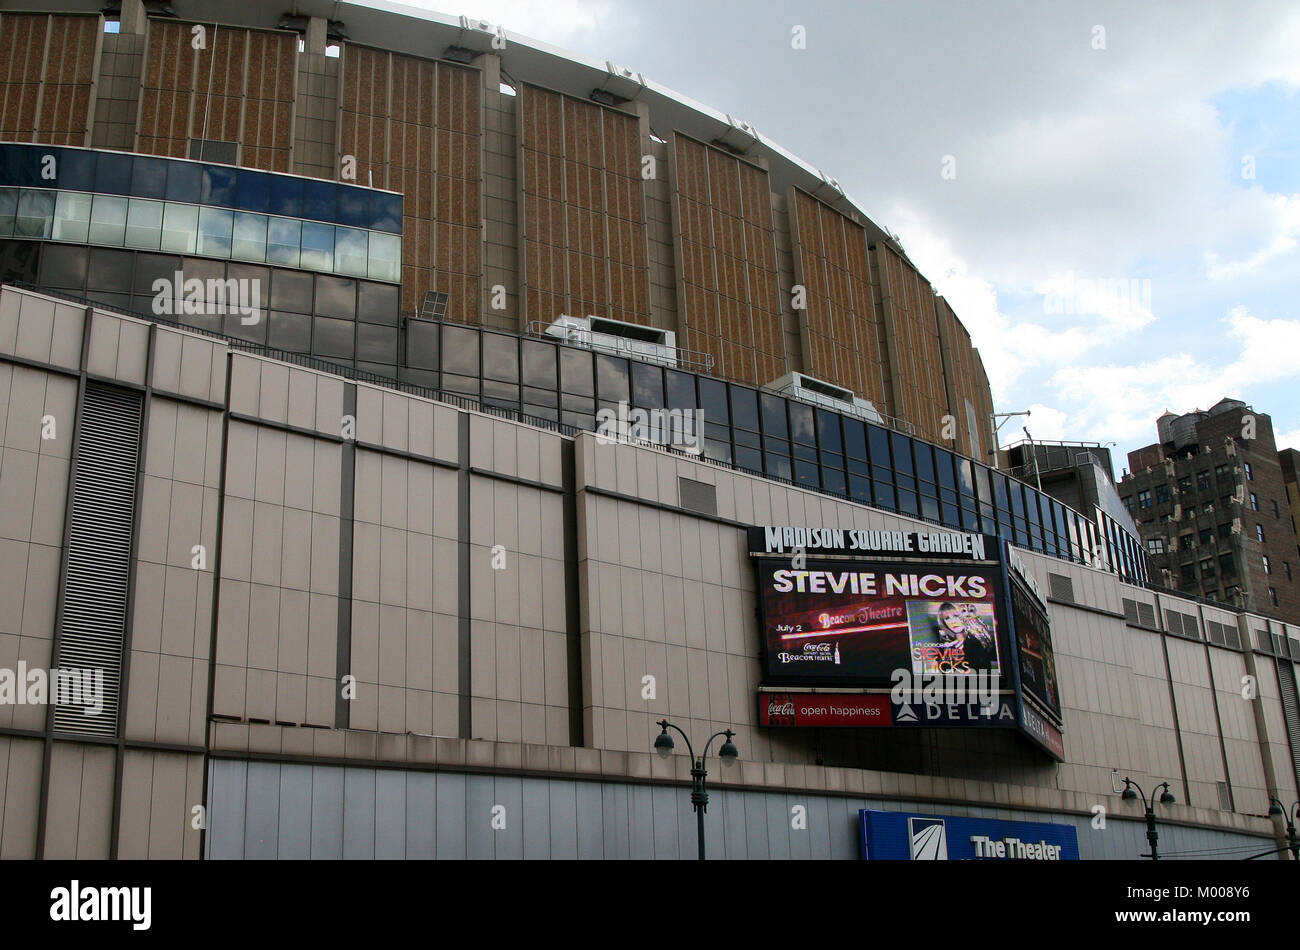 State trying to strip Madison Square Garden, Radio City, Beacon